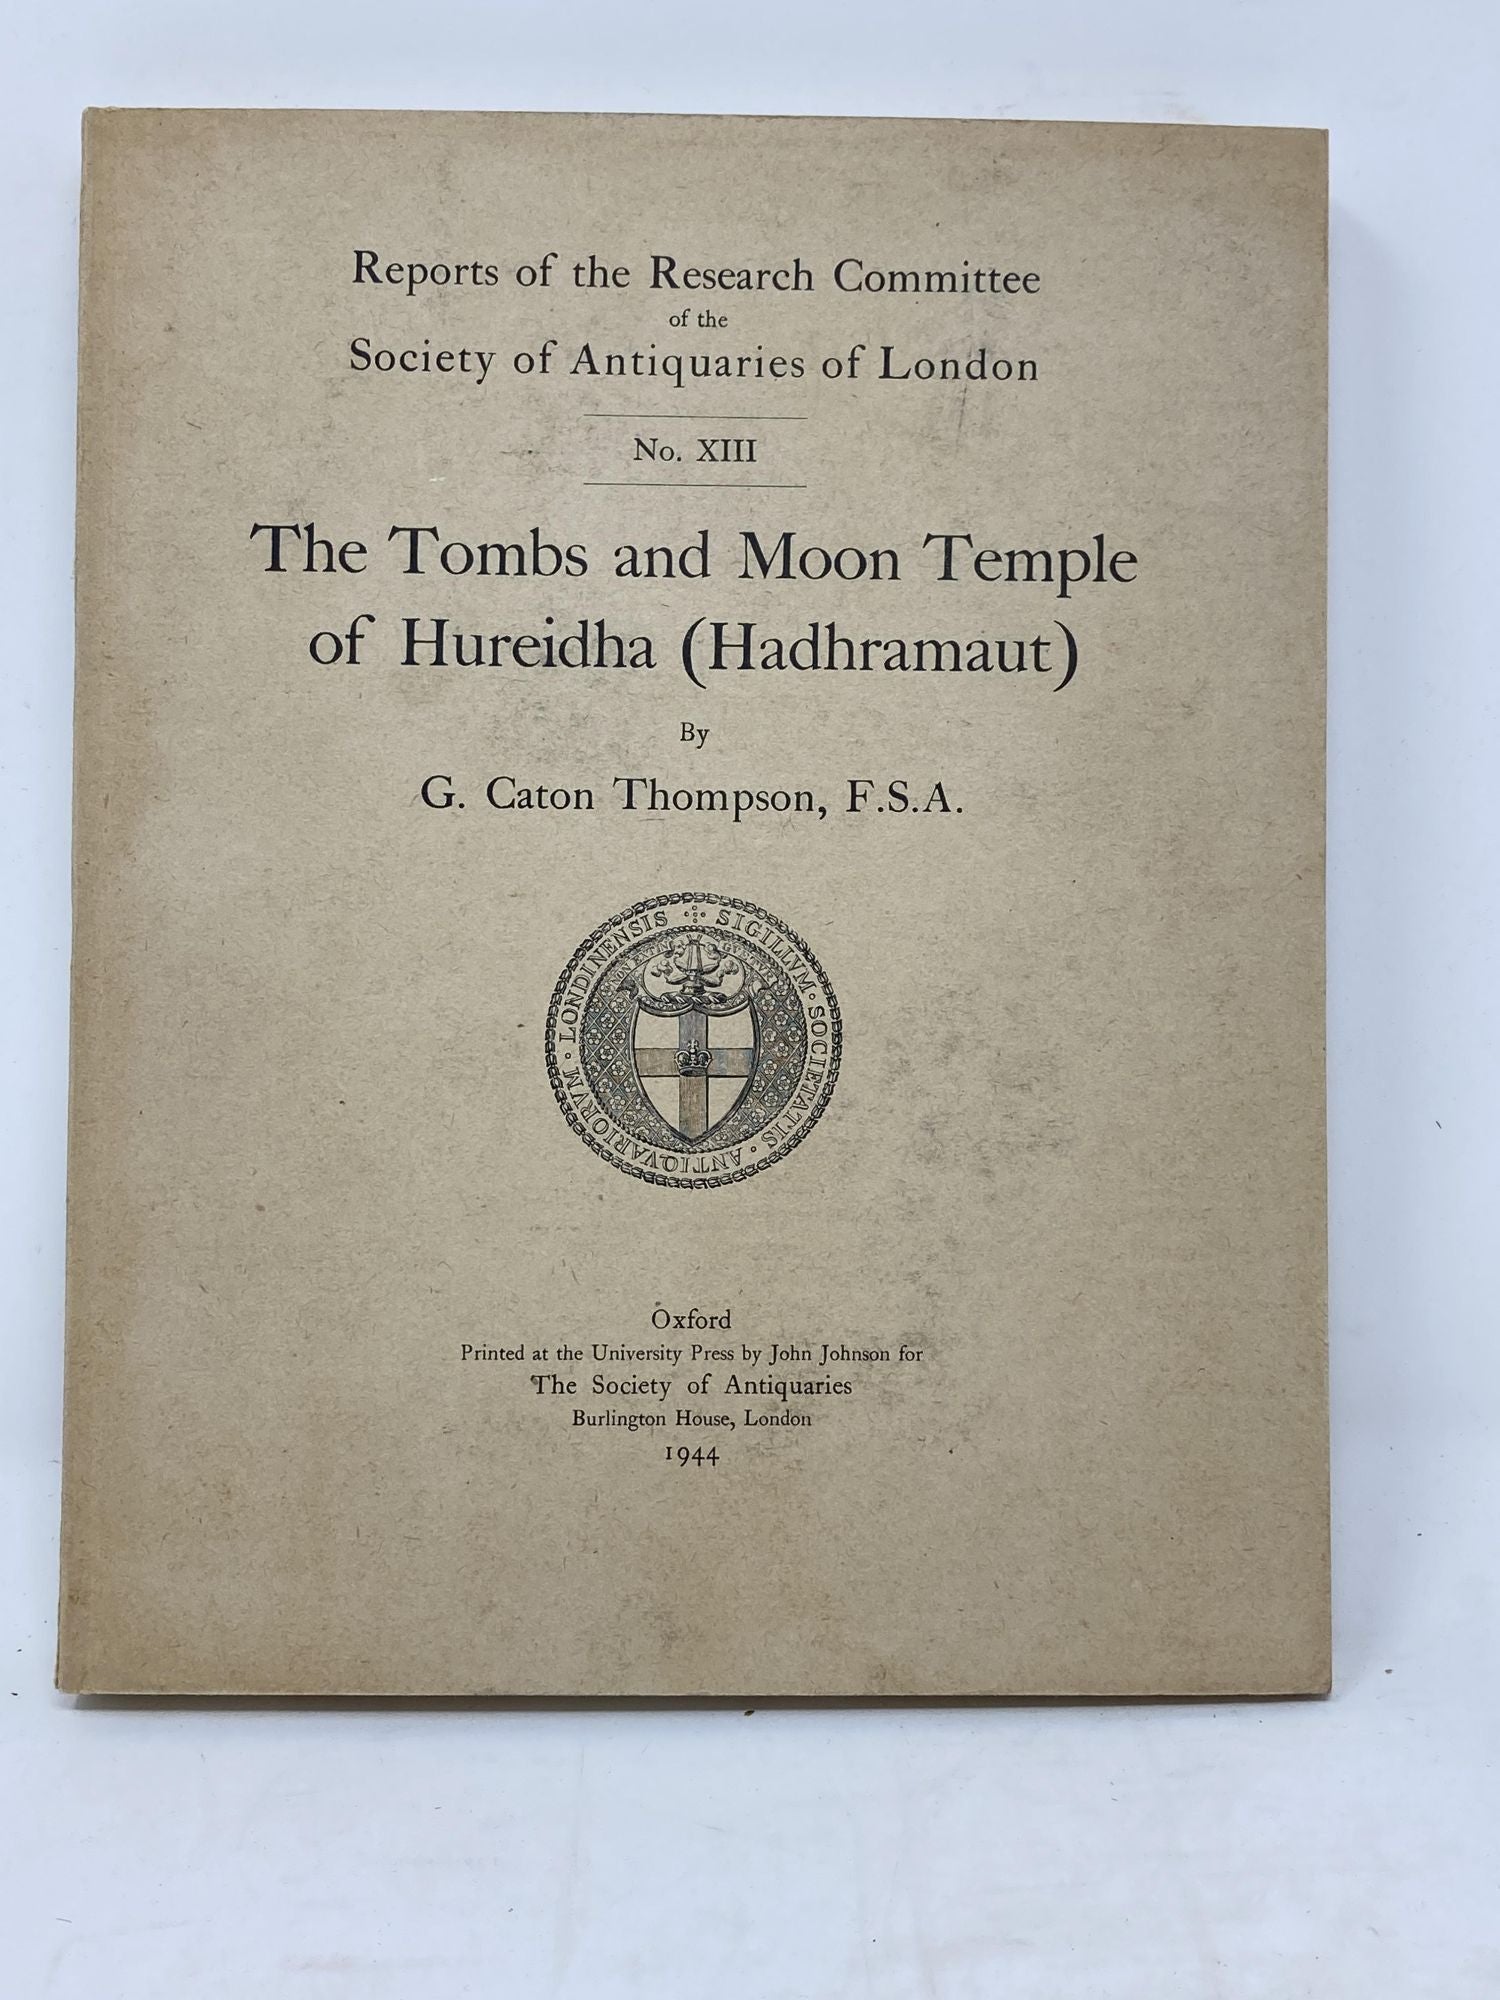 Thompson, G. Caton - The Tombs and Moon Temple of Hureidha (Hadhramaut)